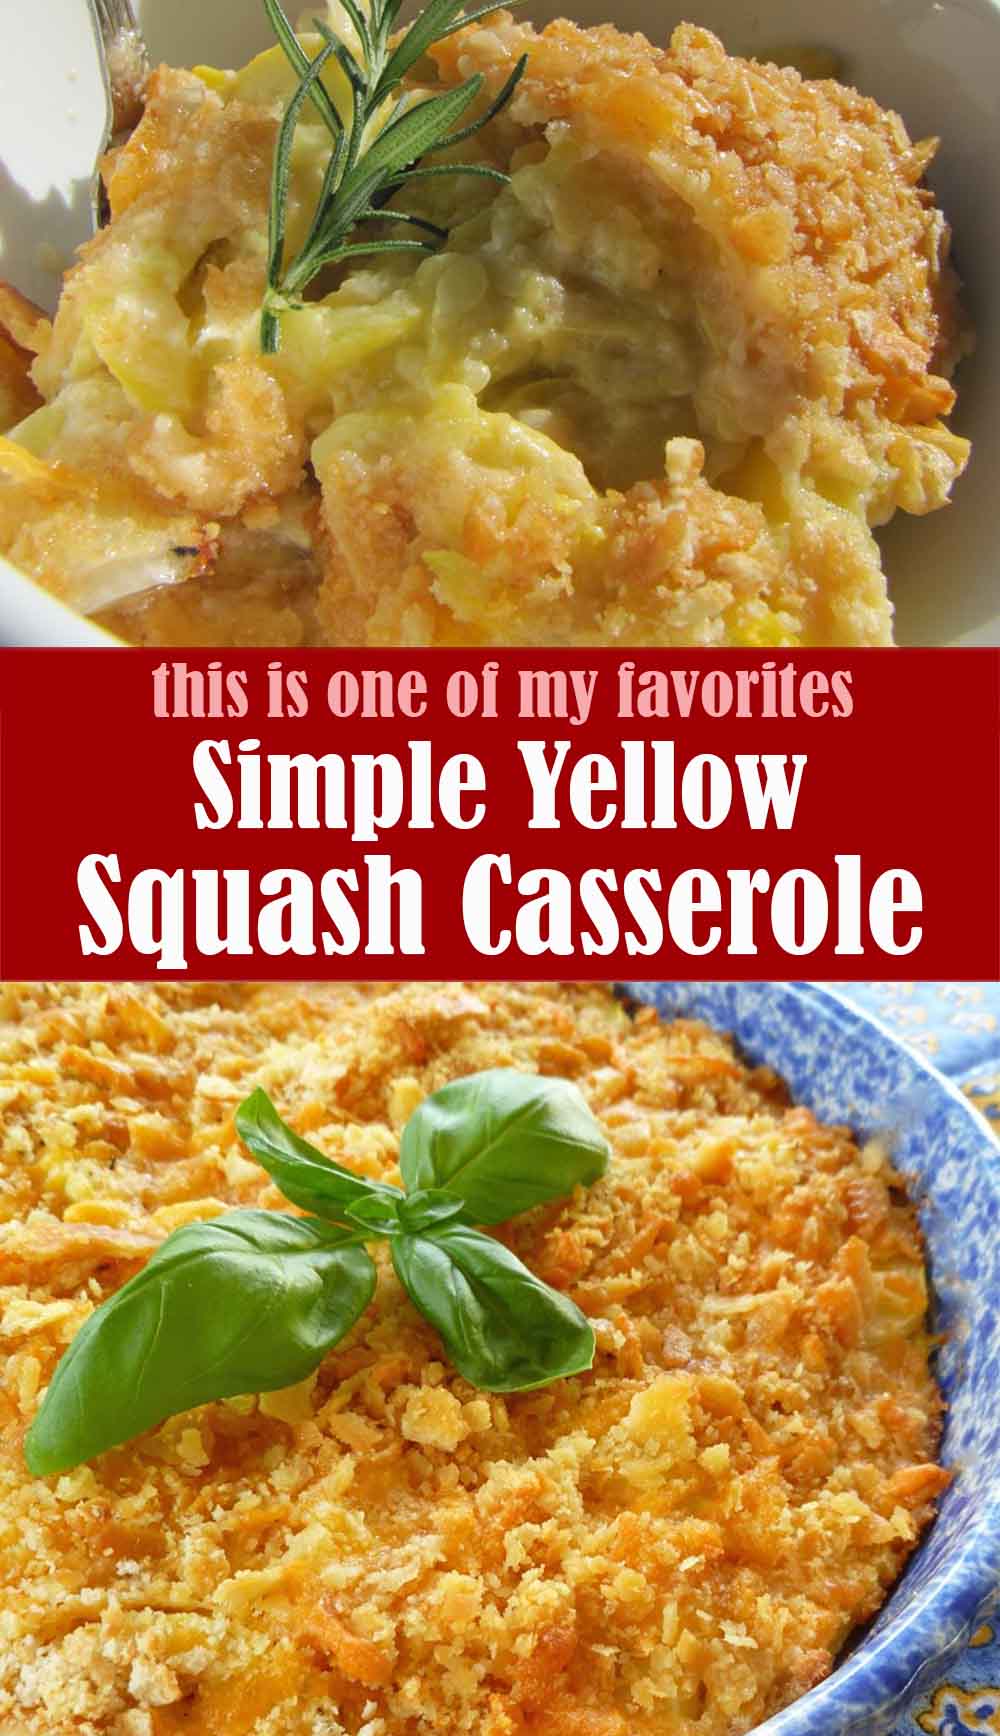 acorn squash casserole recipe easy